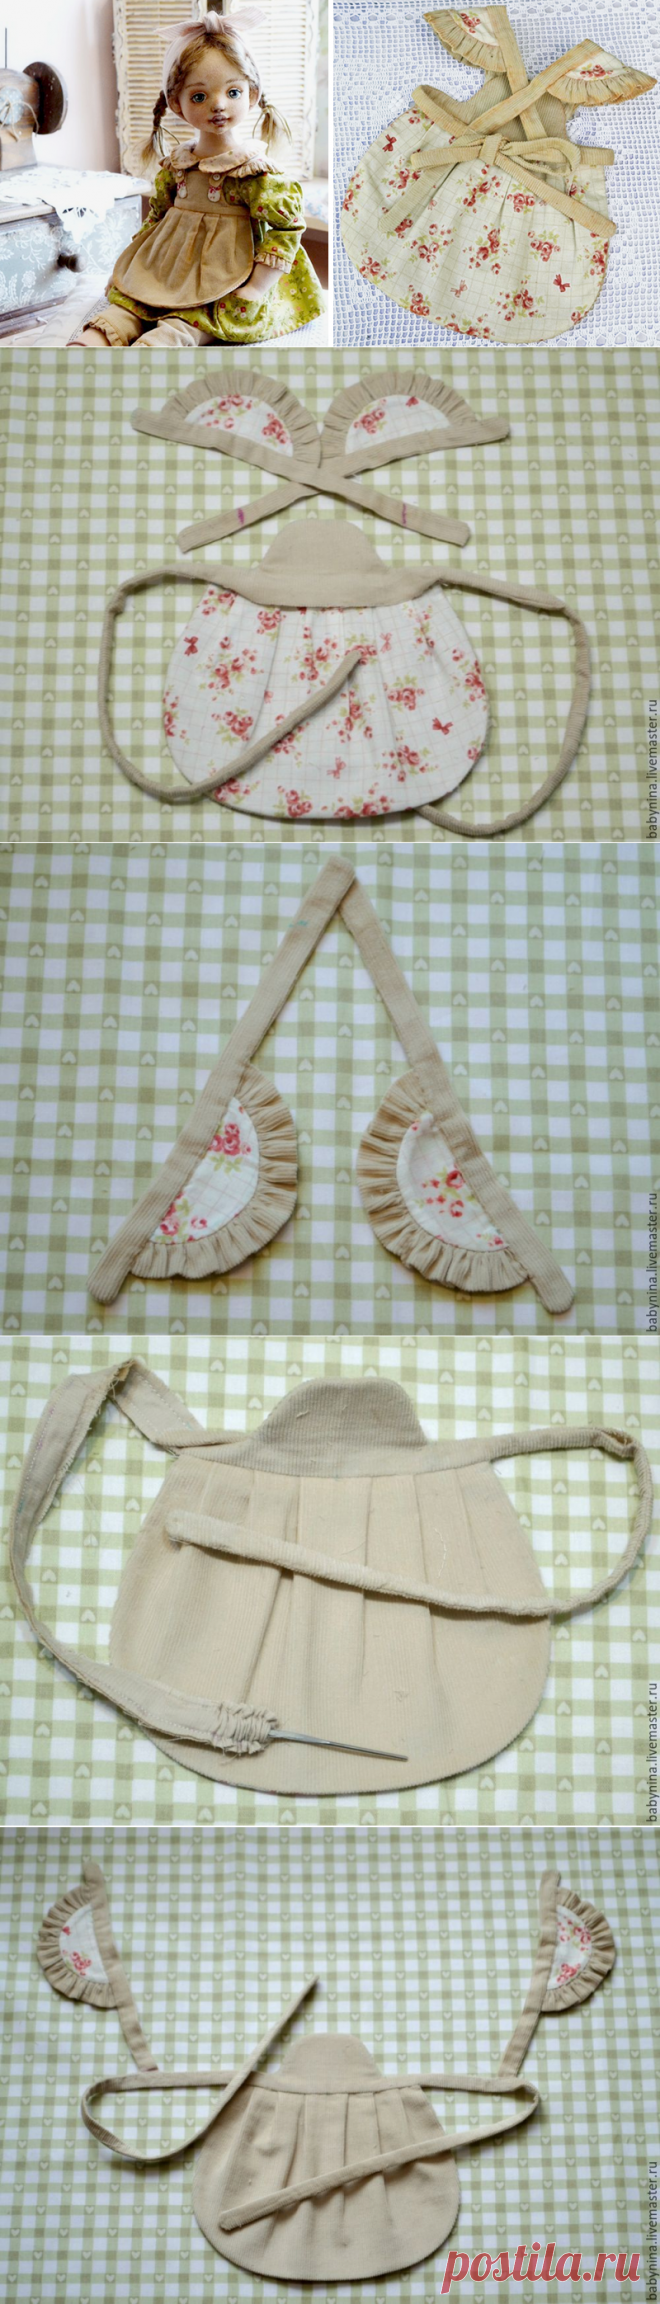 Шьем аккуратный фартучек для куклы - Ярмарка Мастеров - ручная работа, handmade